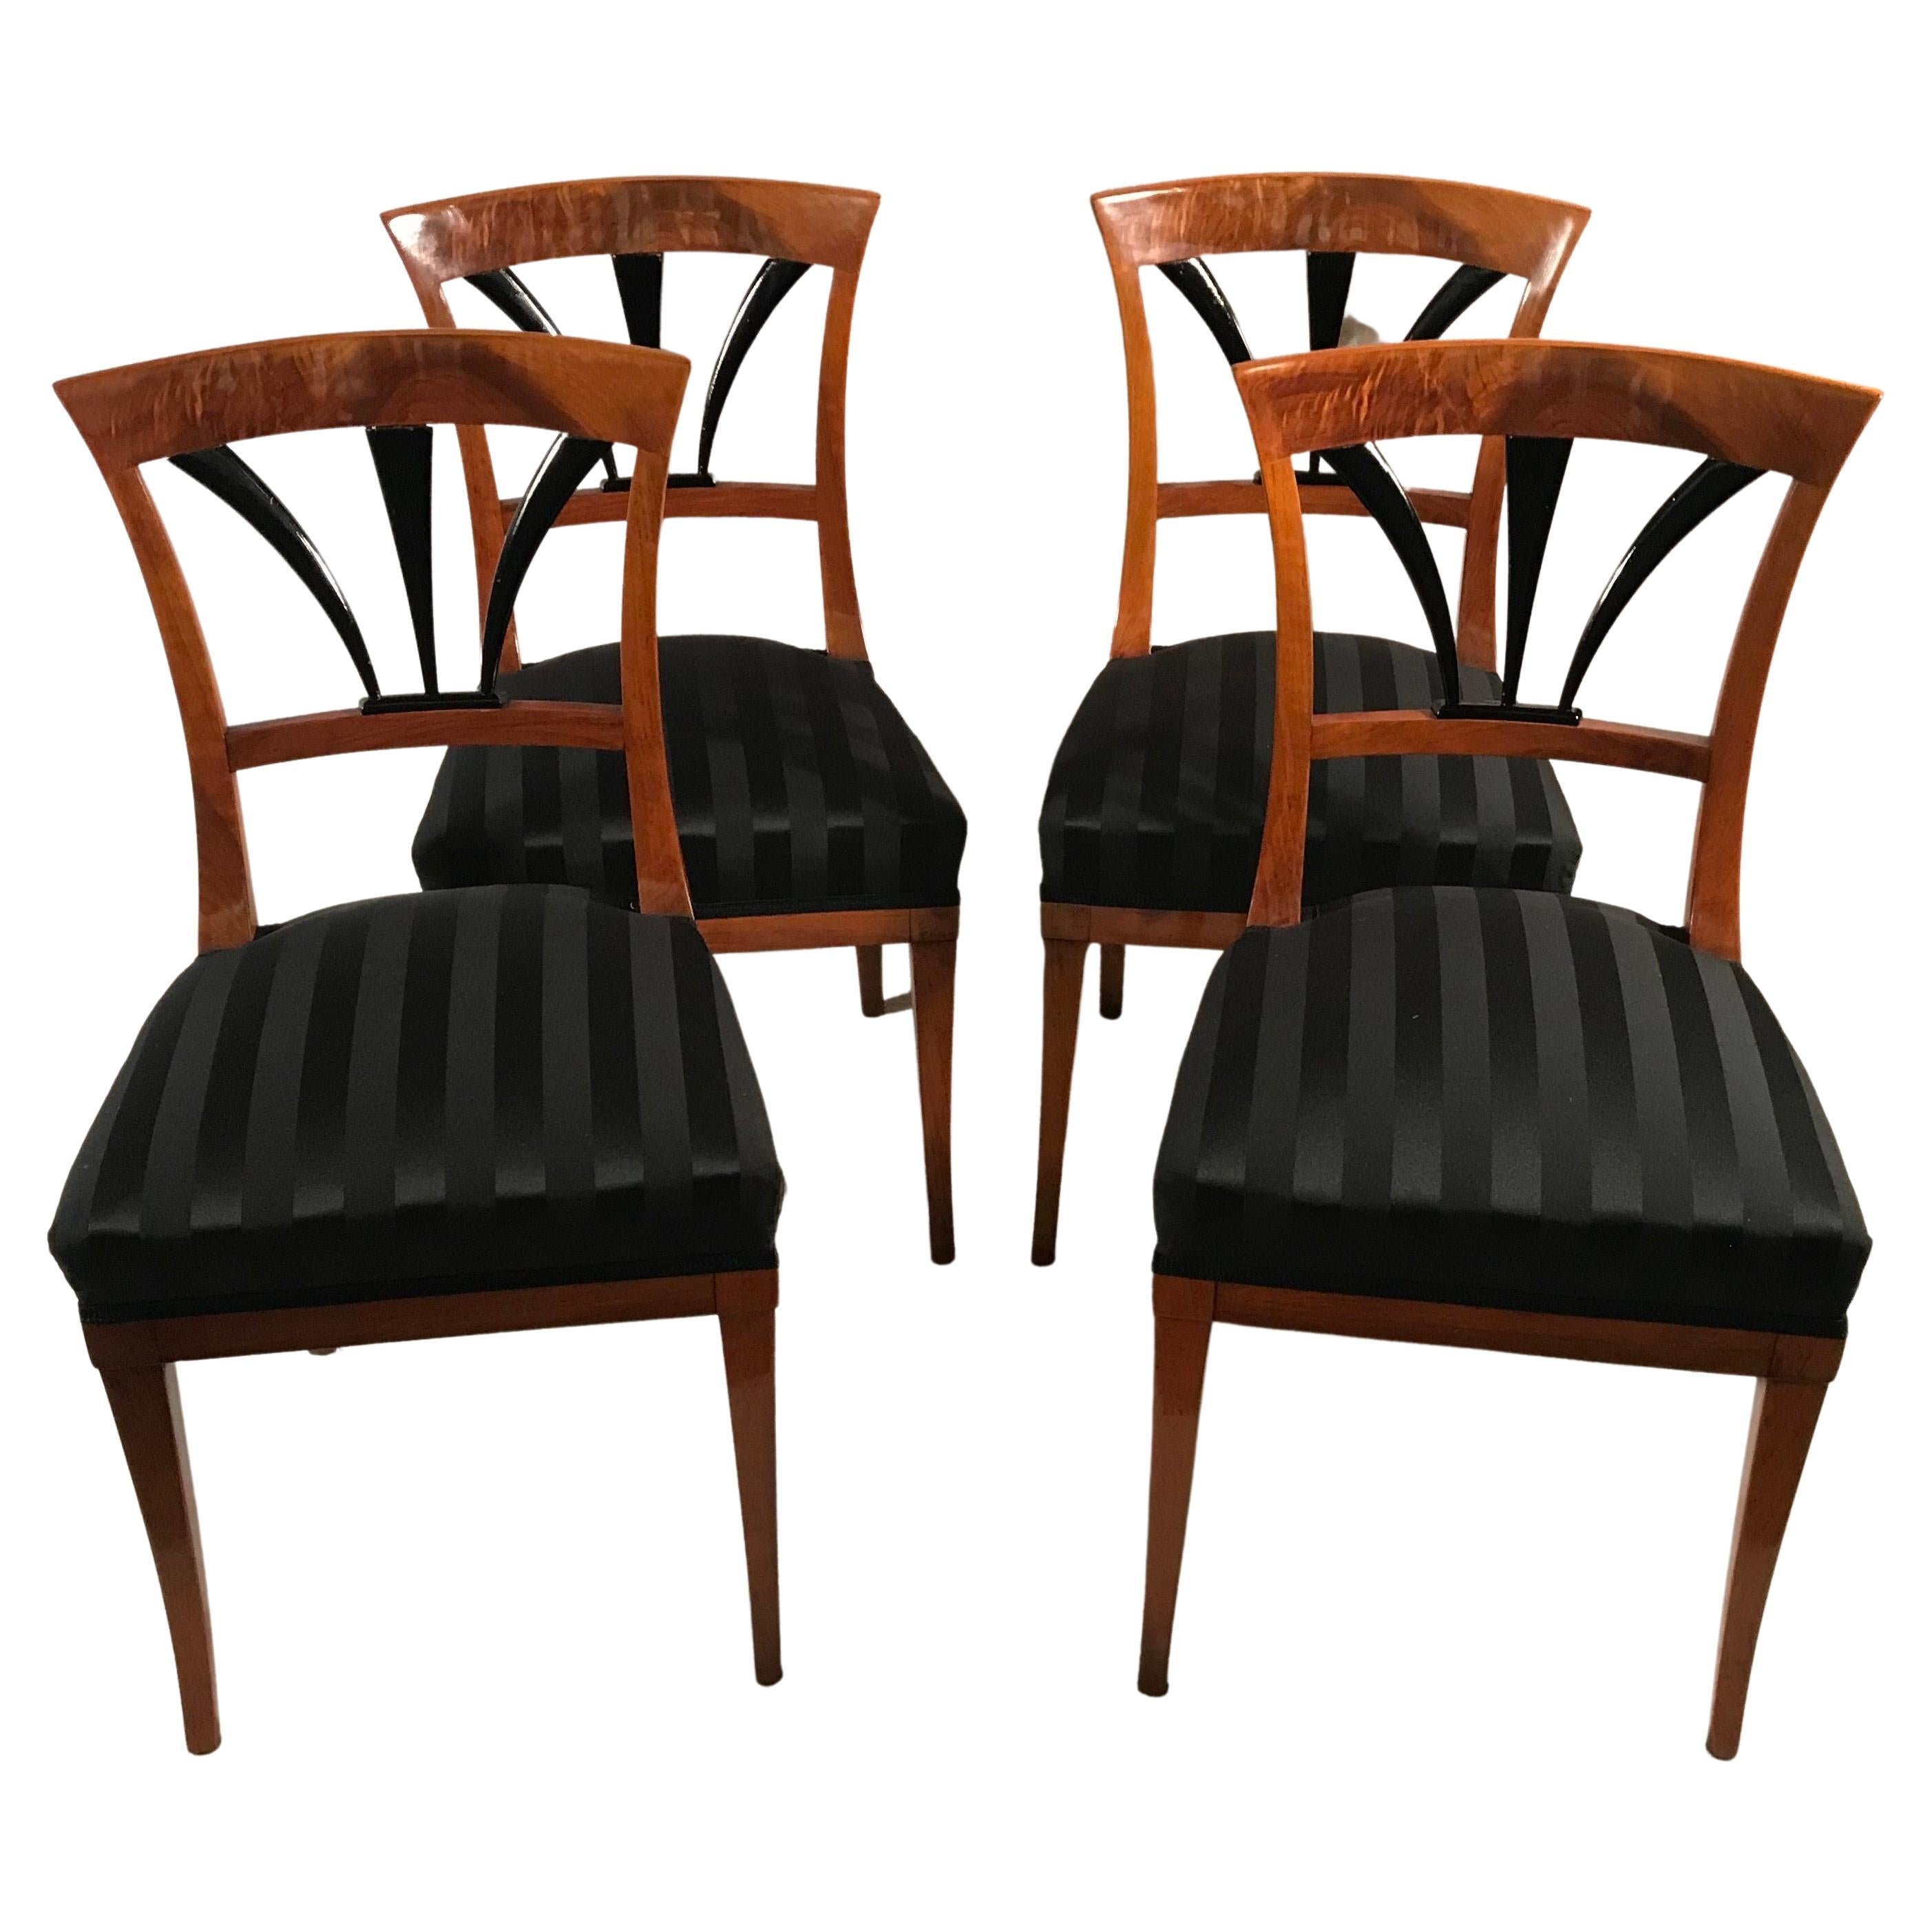 Set of Four Biedermeier Chairs, Germany, 1820